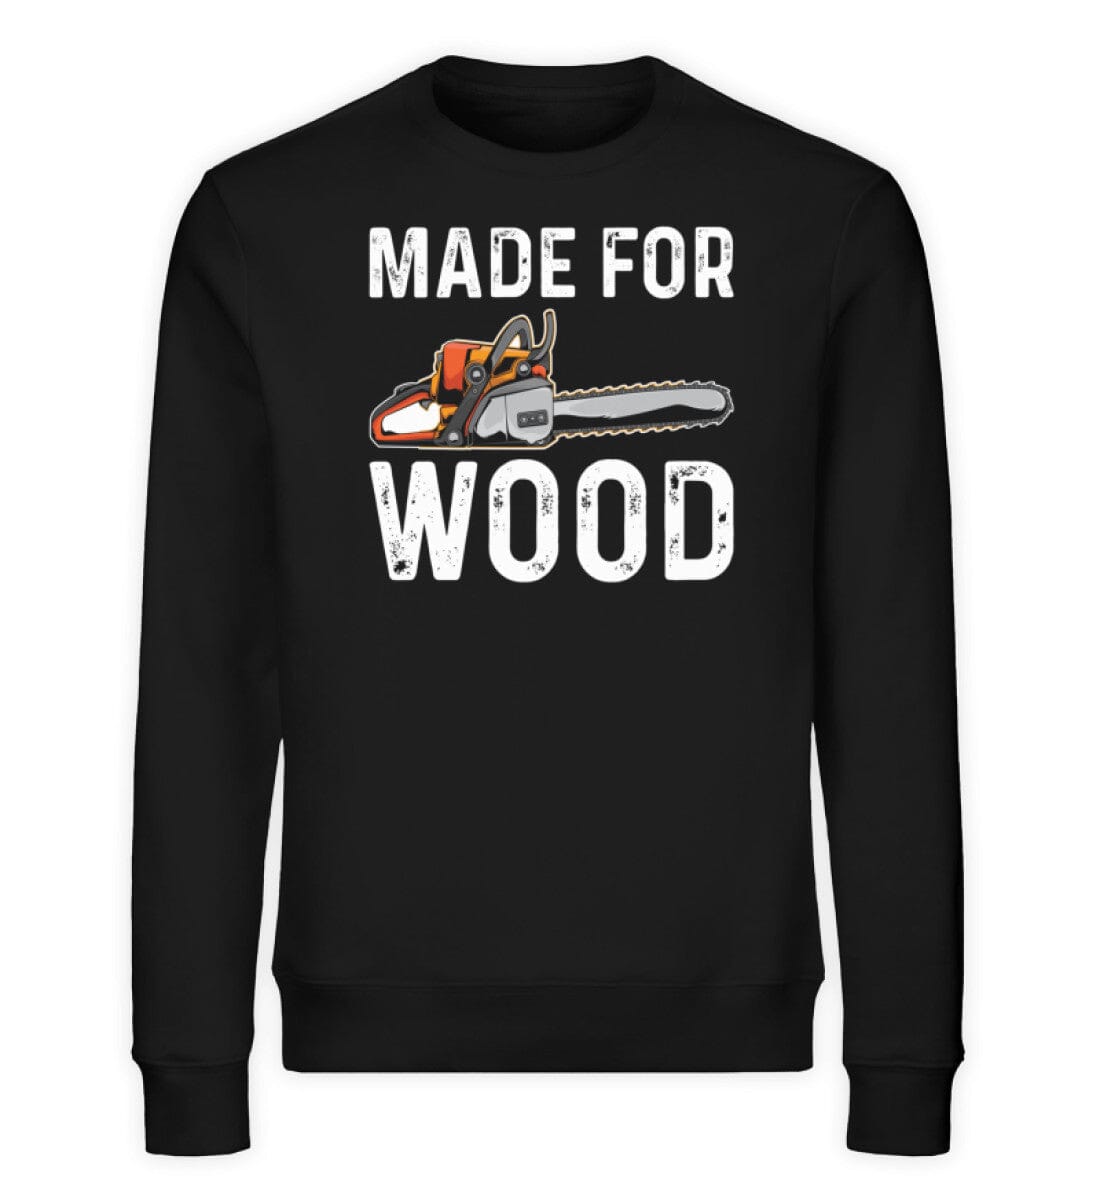 Made for wood - Unisex Bio Sweatshirt Black XS 